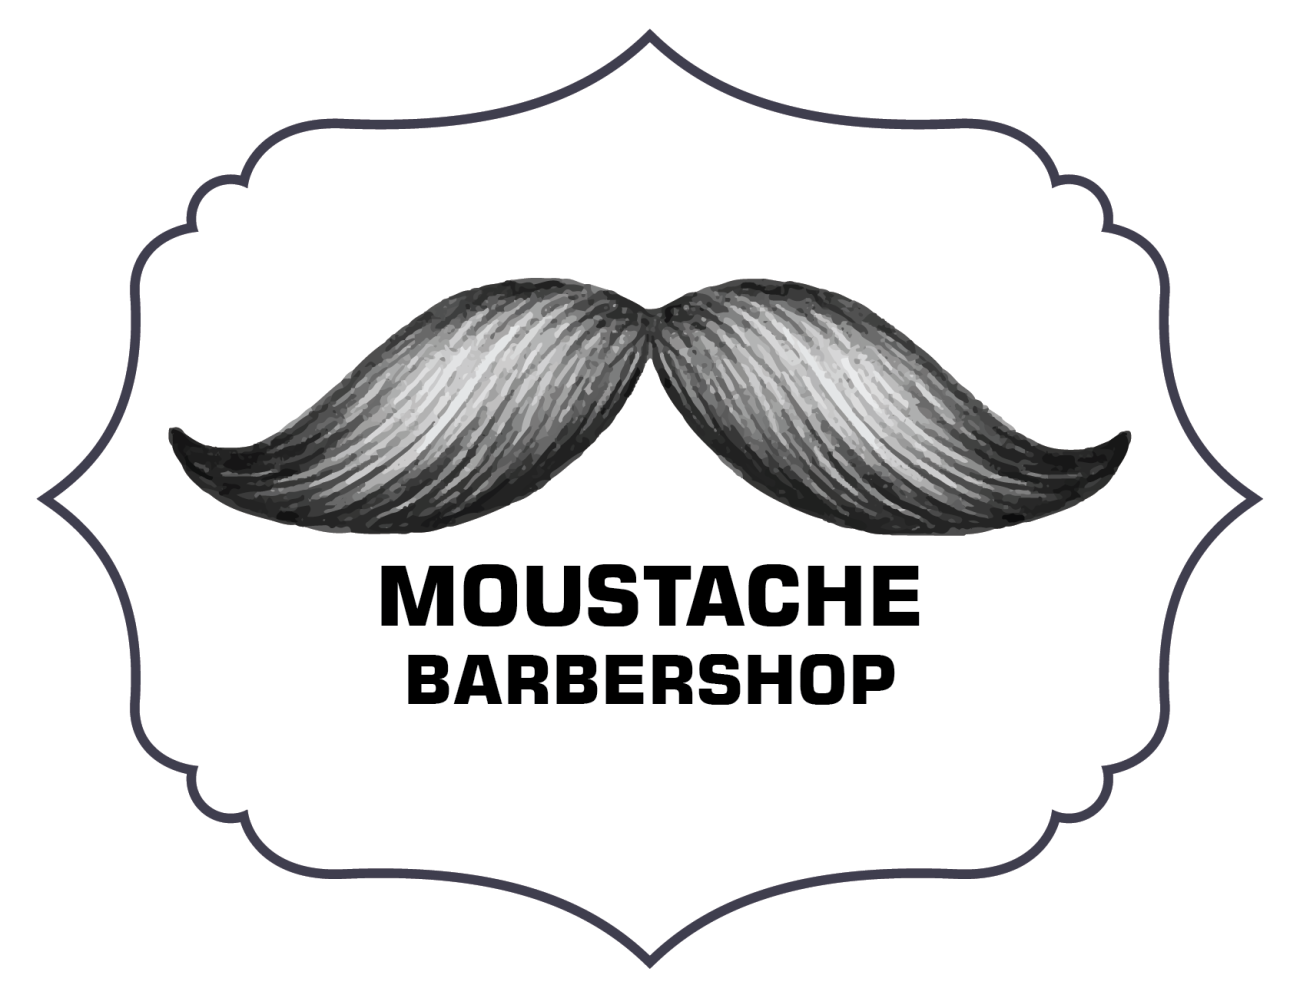 Moustache Barbershop, Hd Png Download